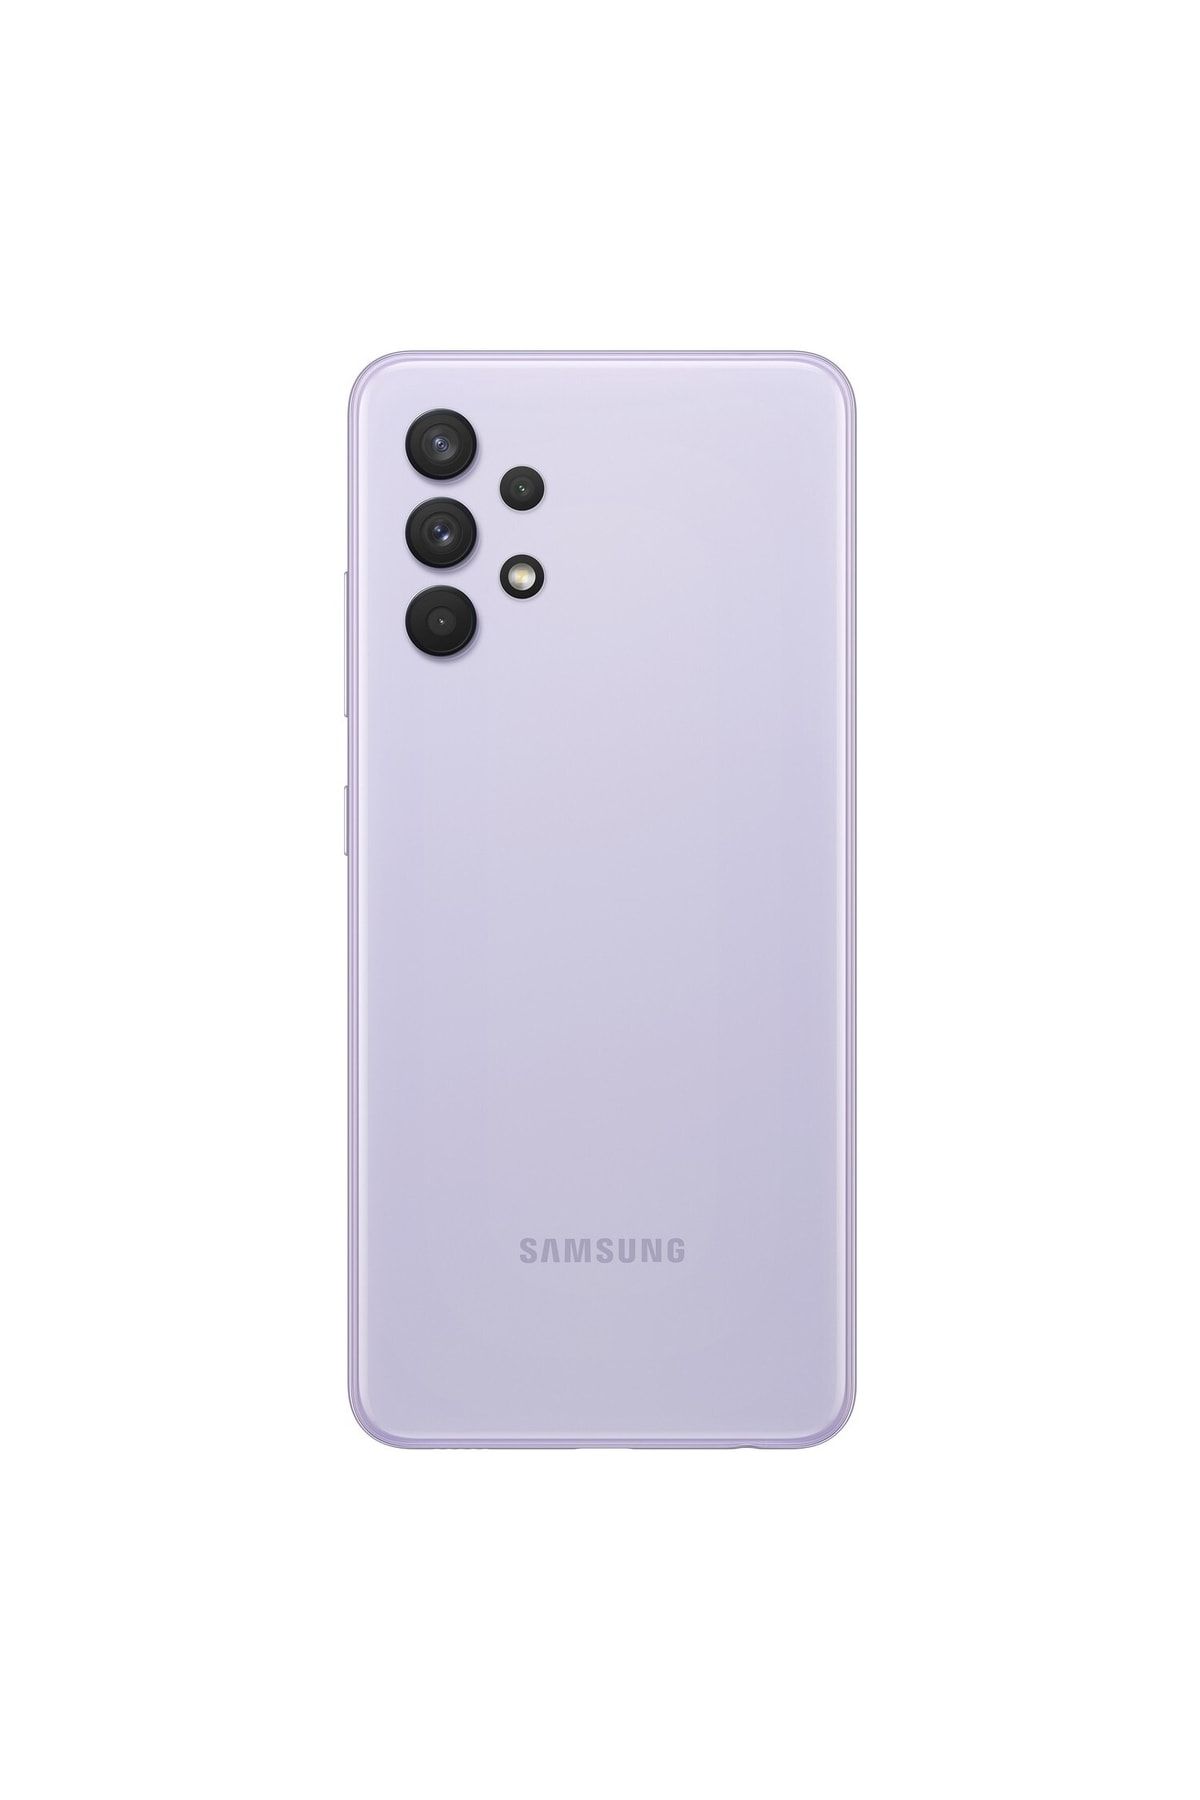 Samsung Yenilenmiş Galaxy A32 128 GB White Cep Telefonu (12 Ay Garantili) - B Kalite